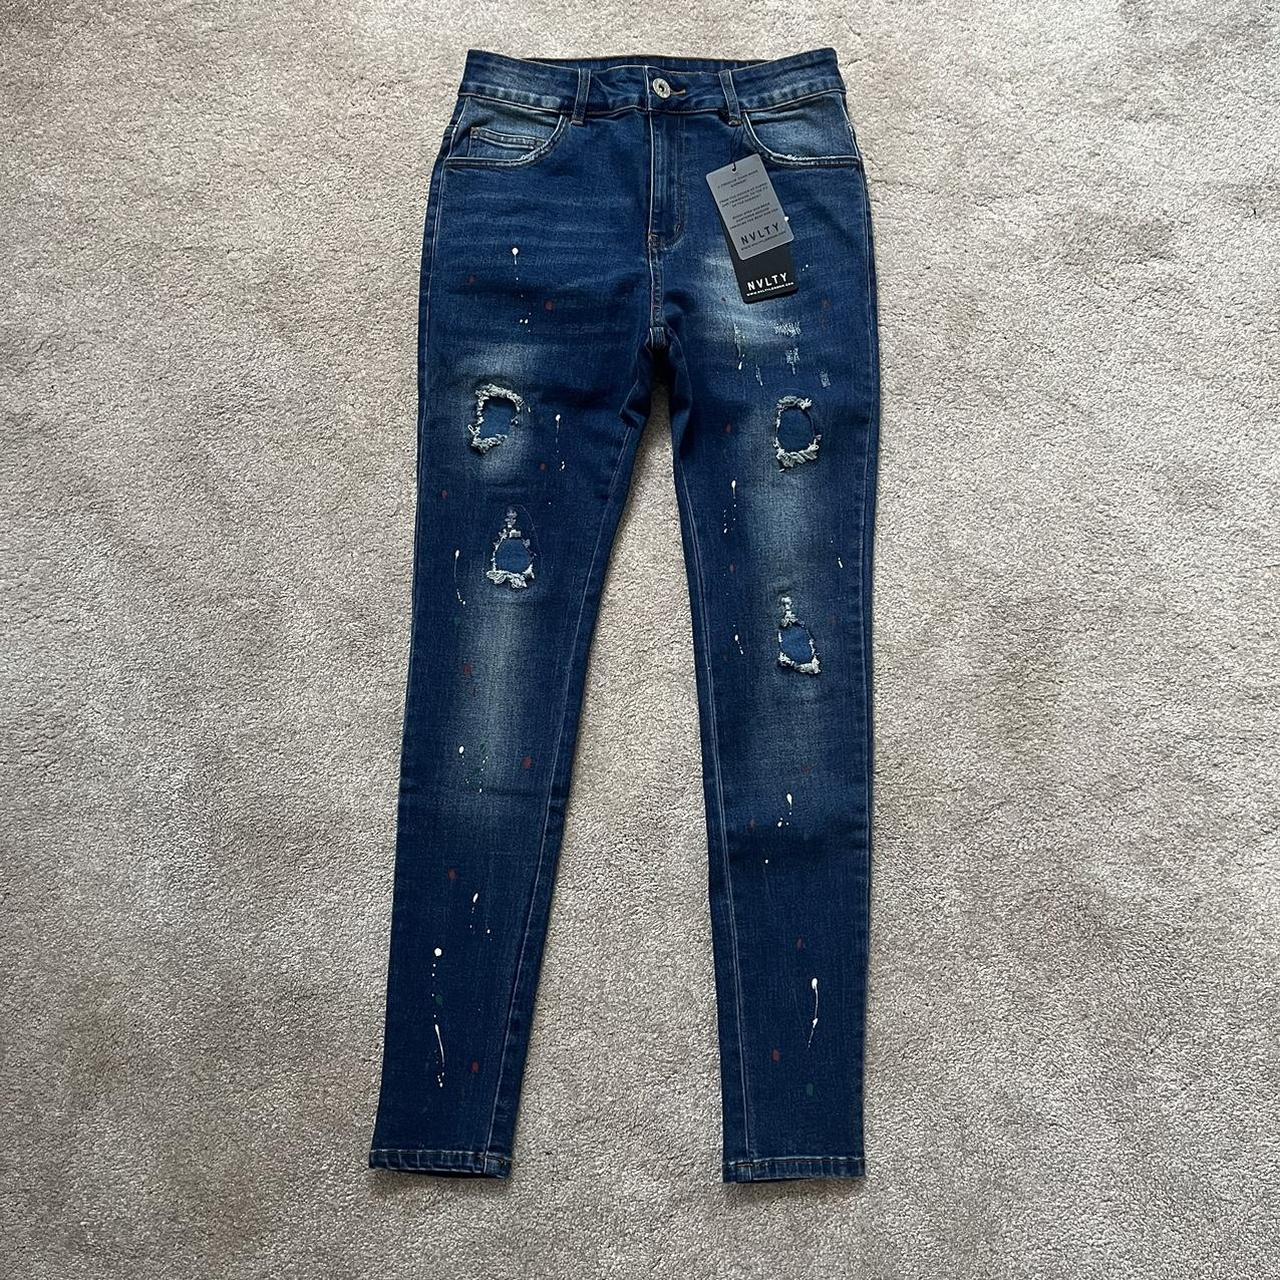 NVLTY Paint Splatter Skinny Jeans in Navy Size... - Depop